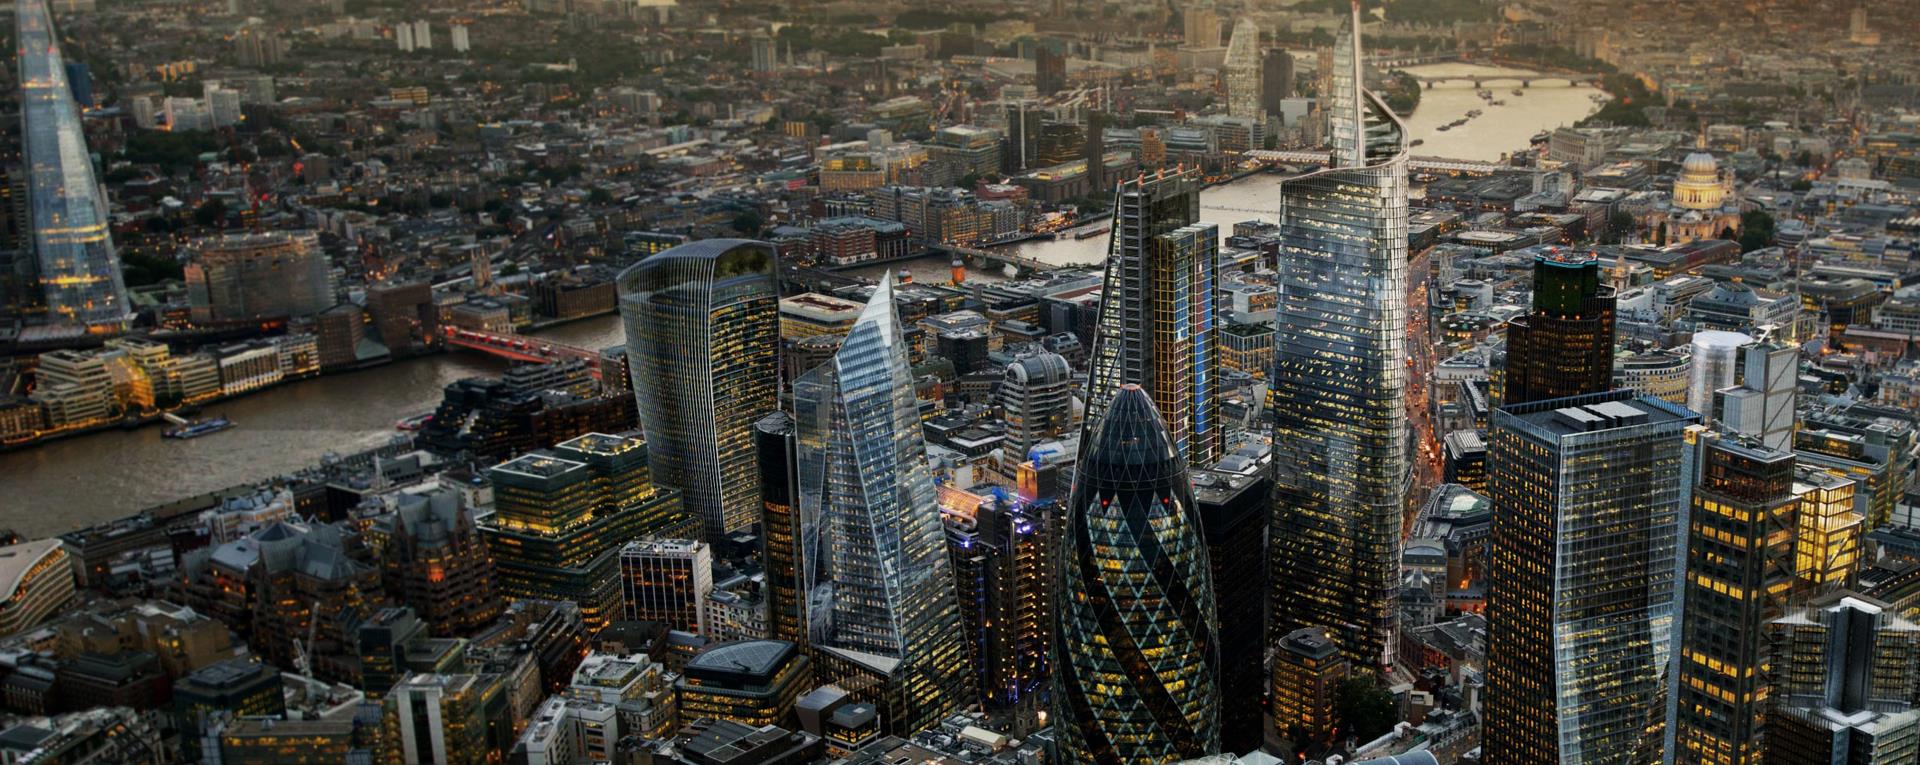 Countrywide development plc London skyline